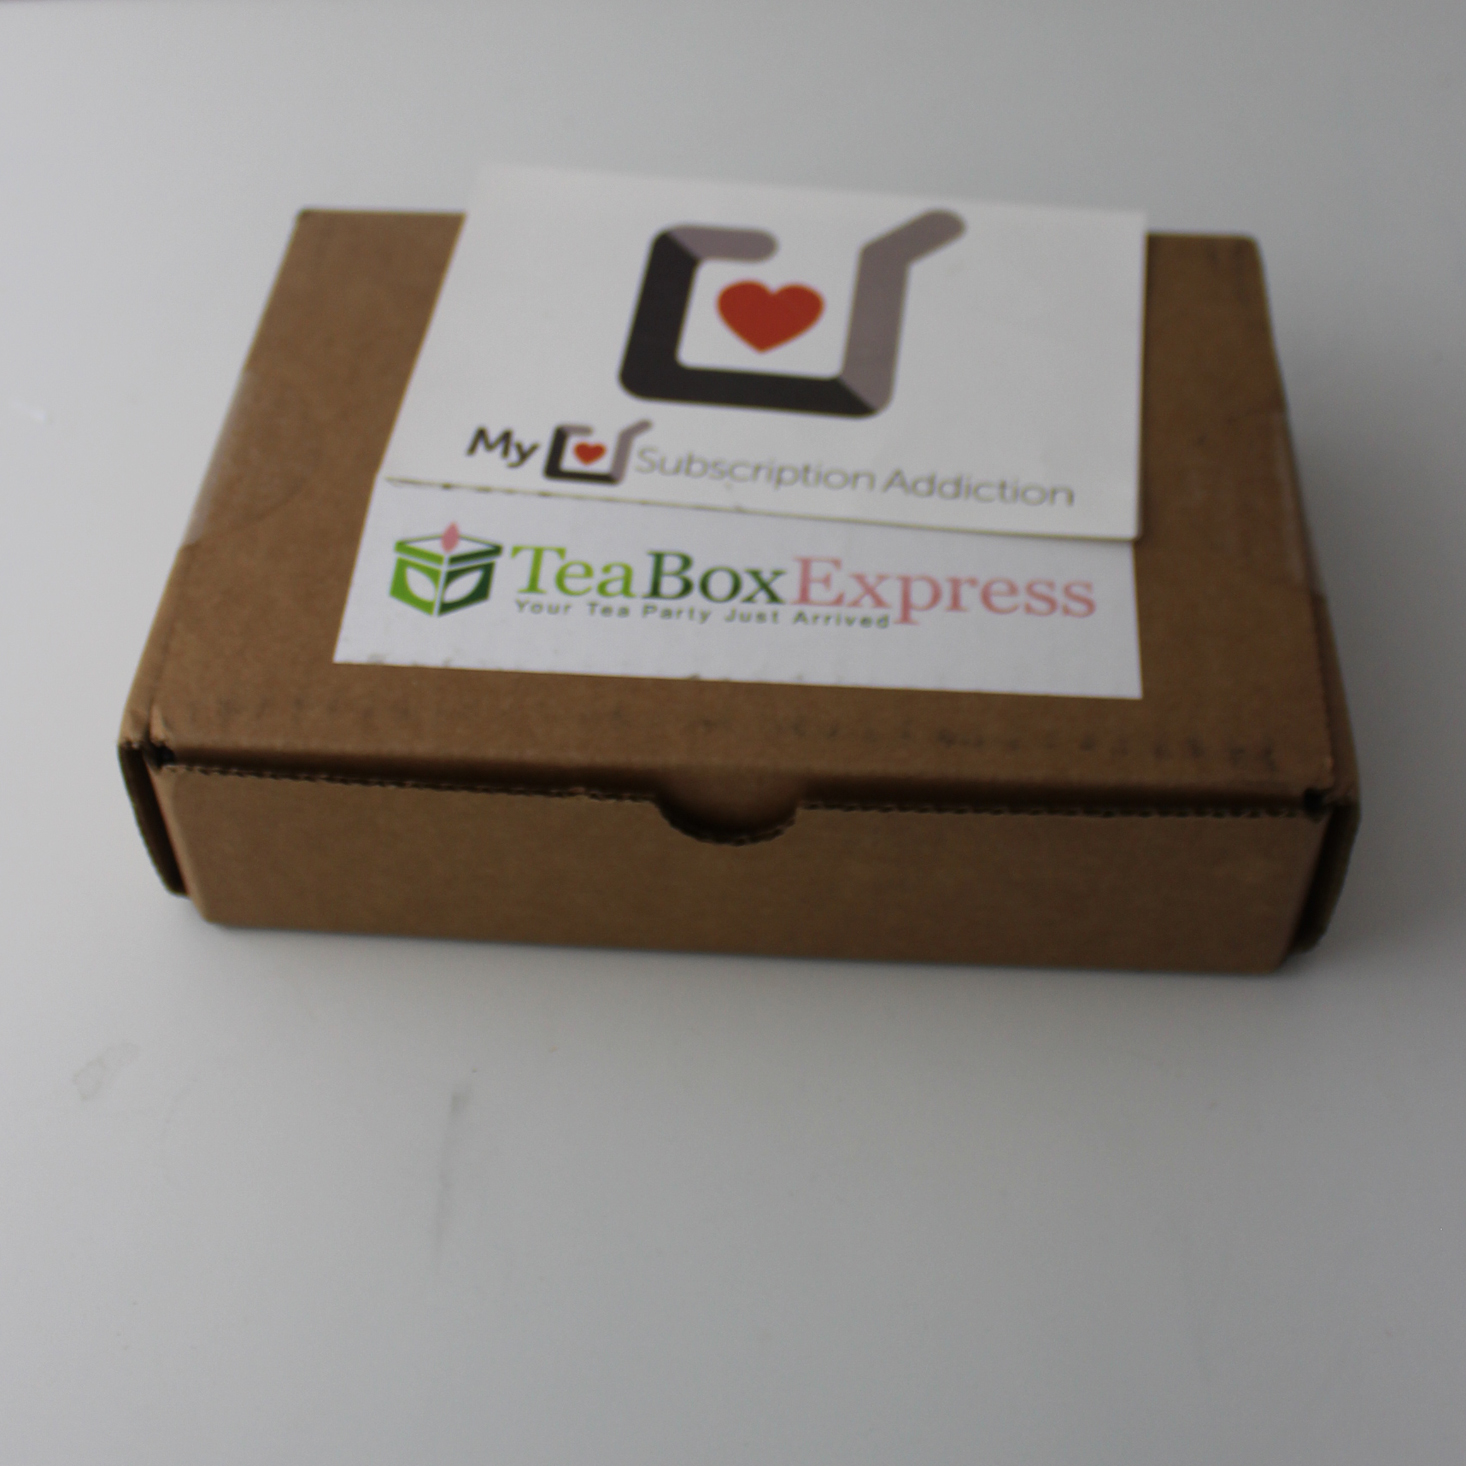 Tea Box Express Subscription Review + Coupon – June 2018